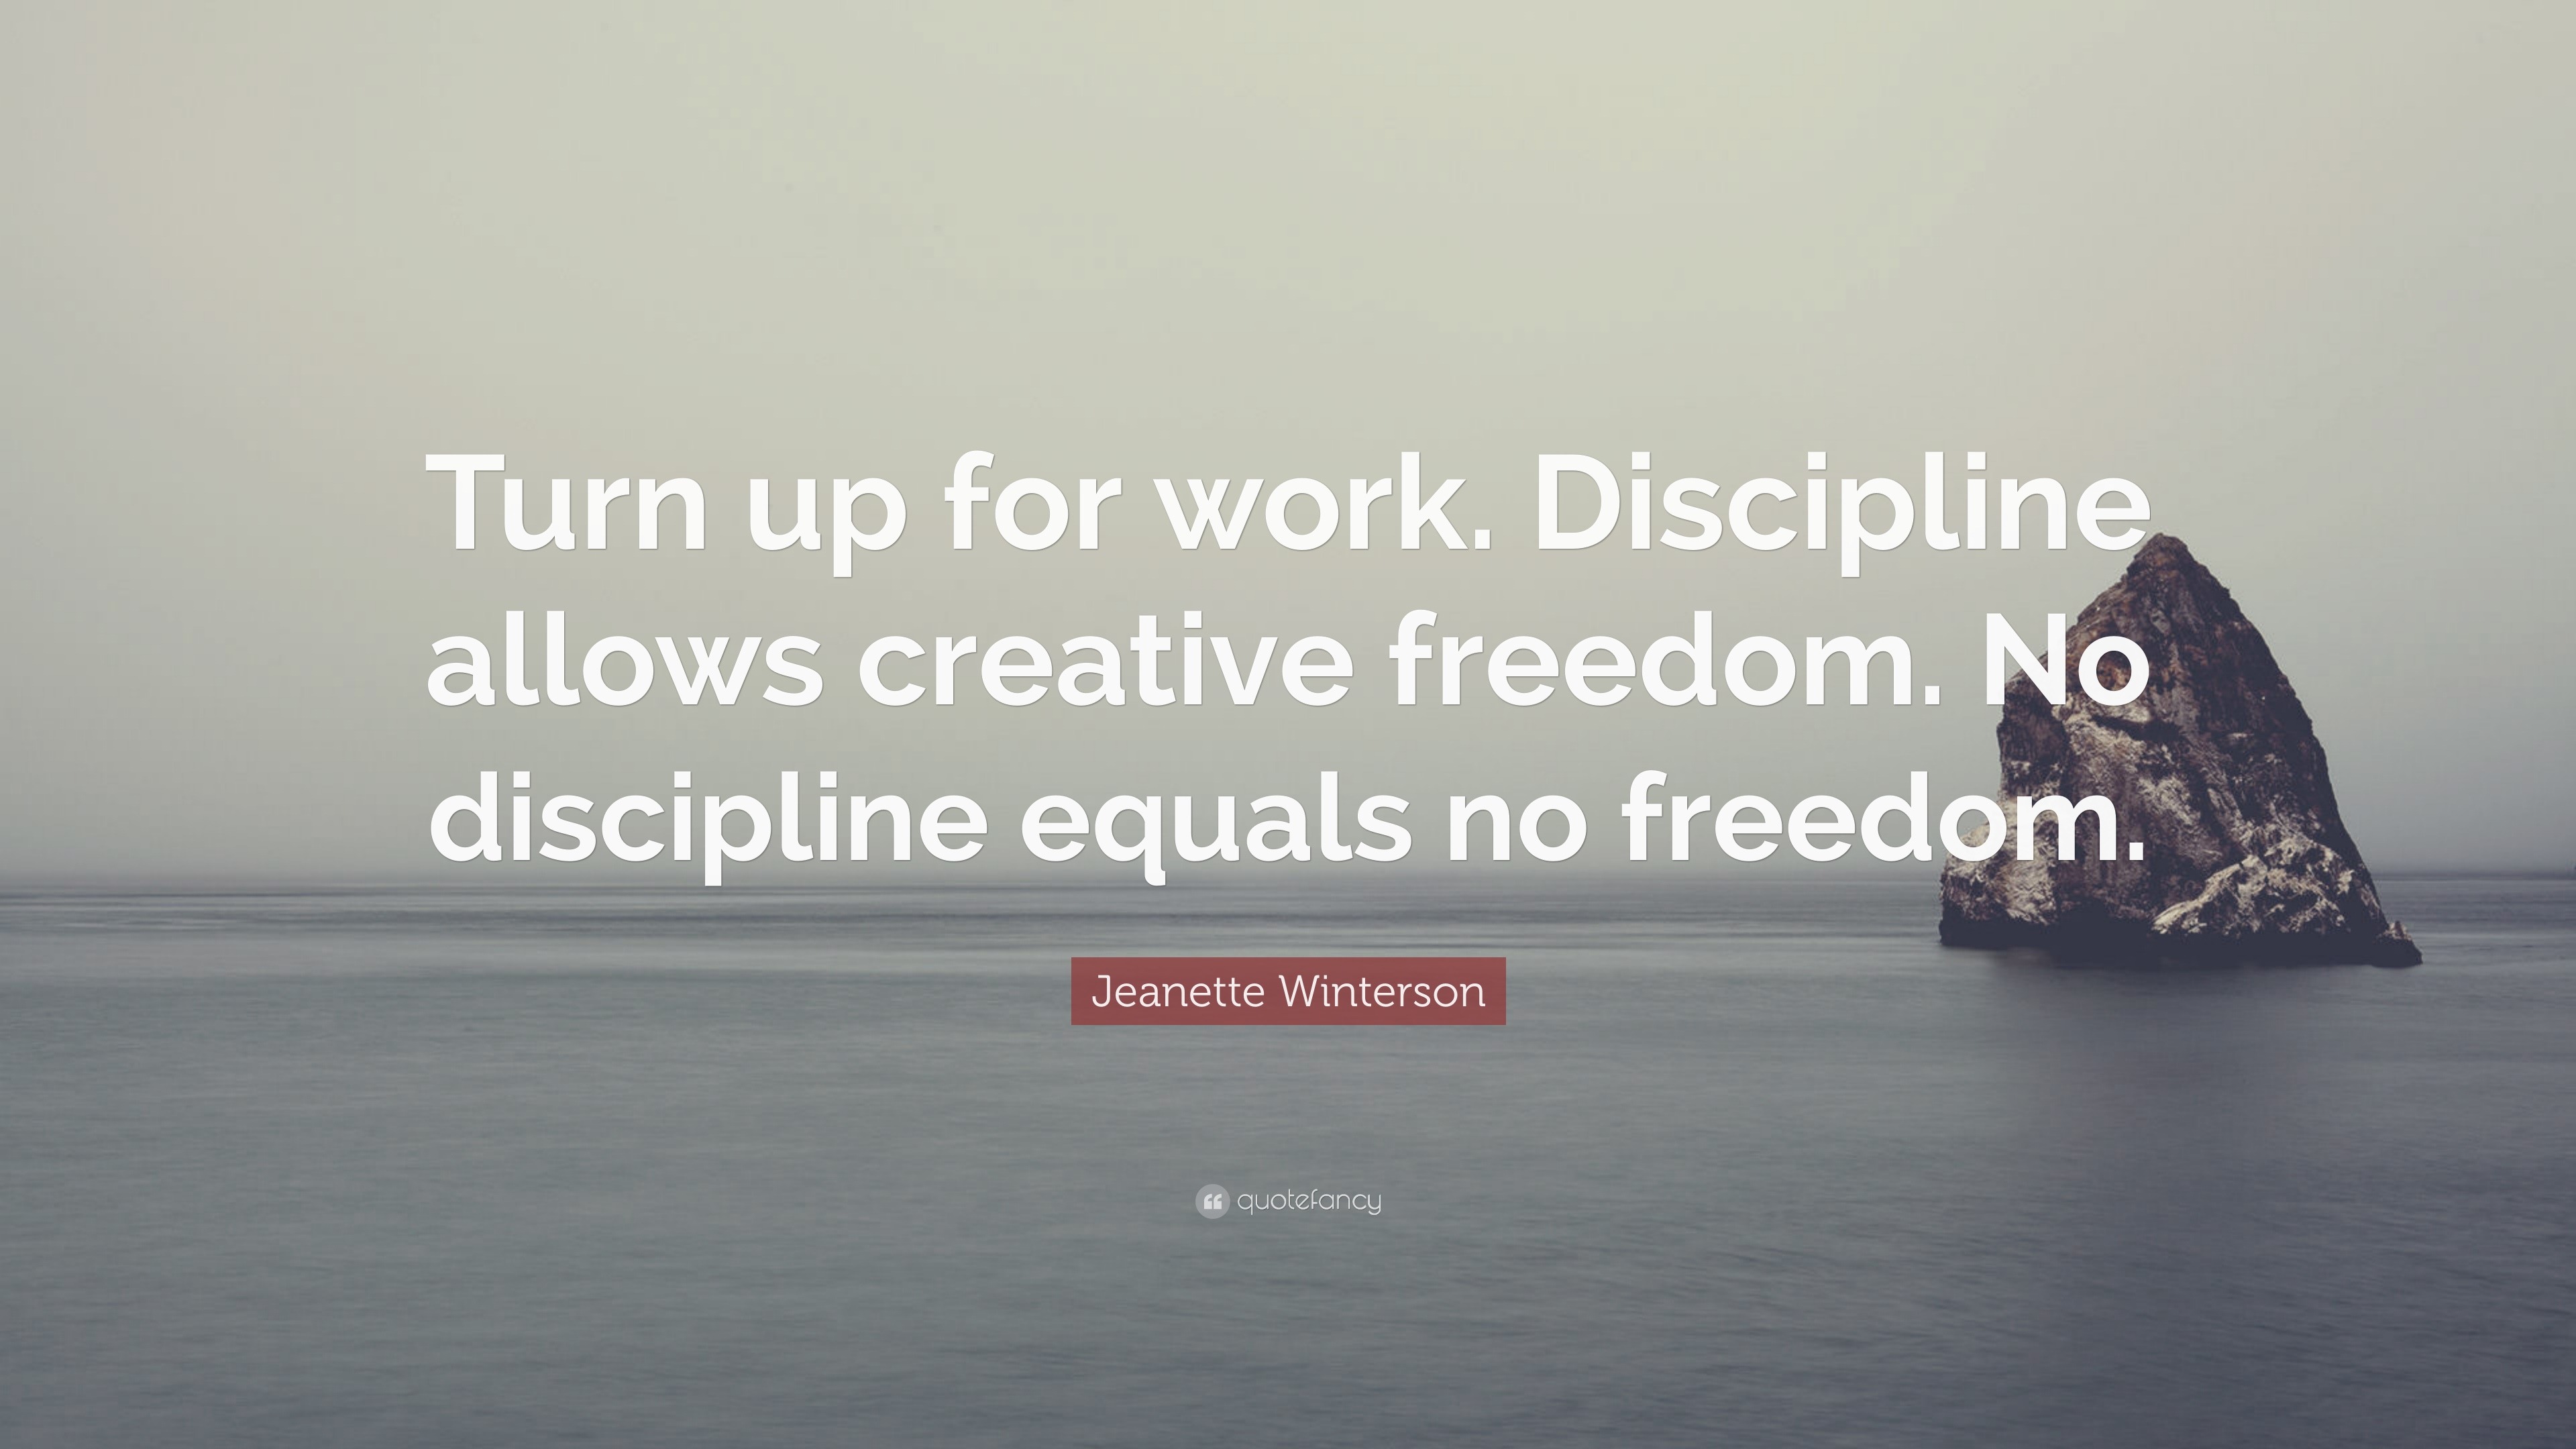 discipline equals freedom epub